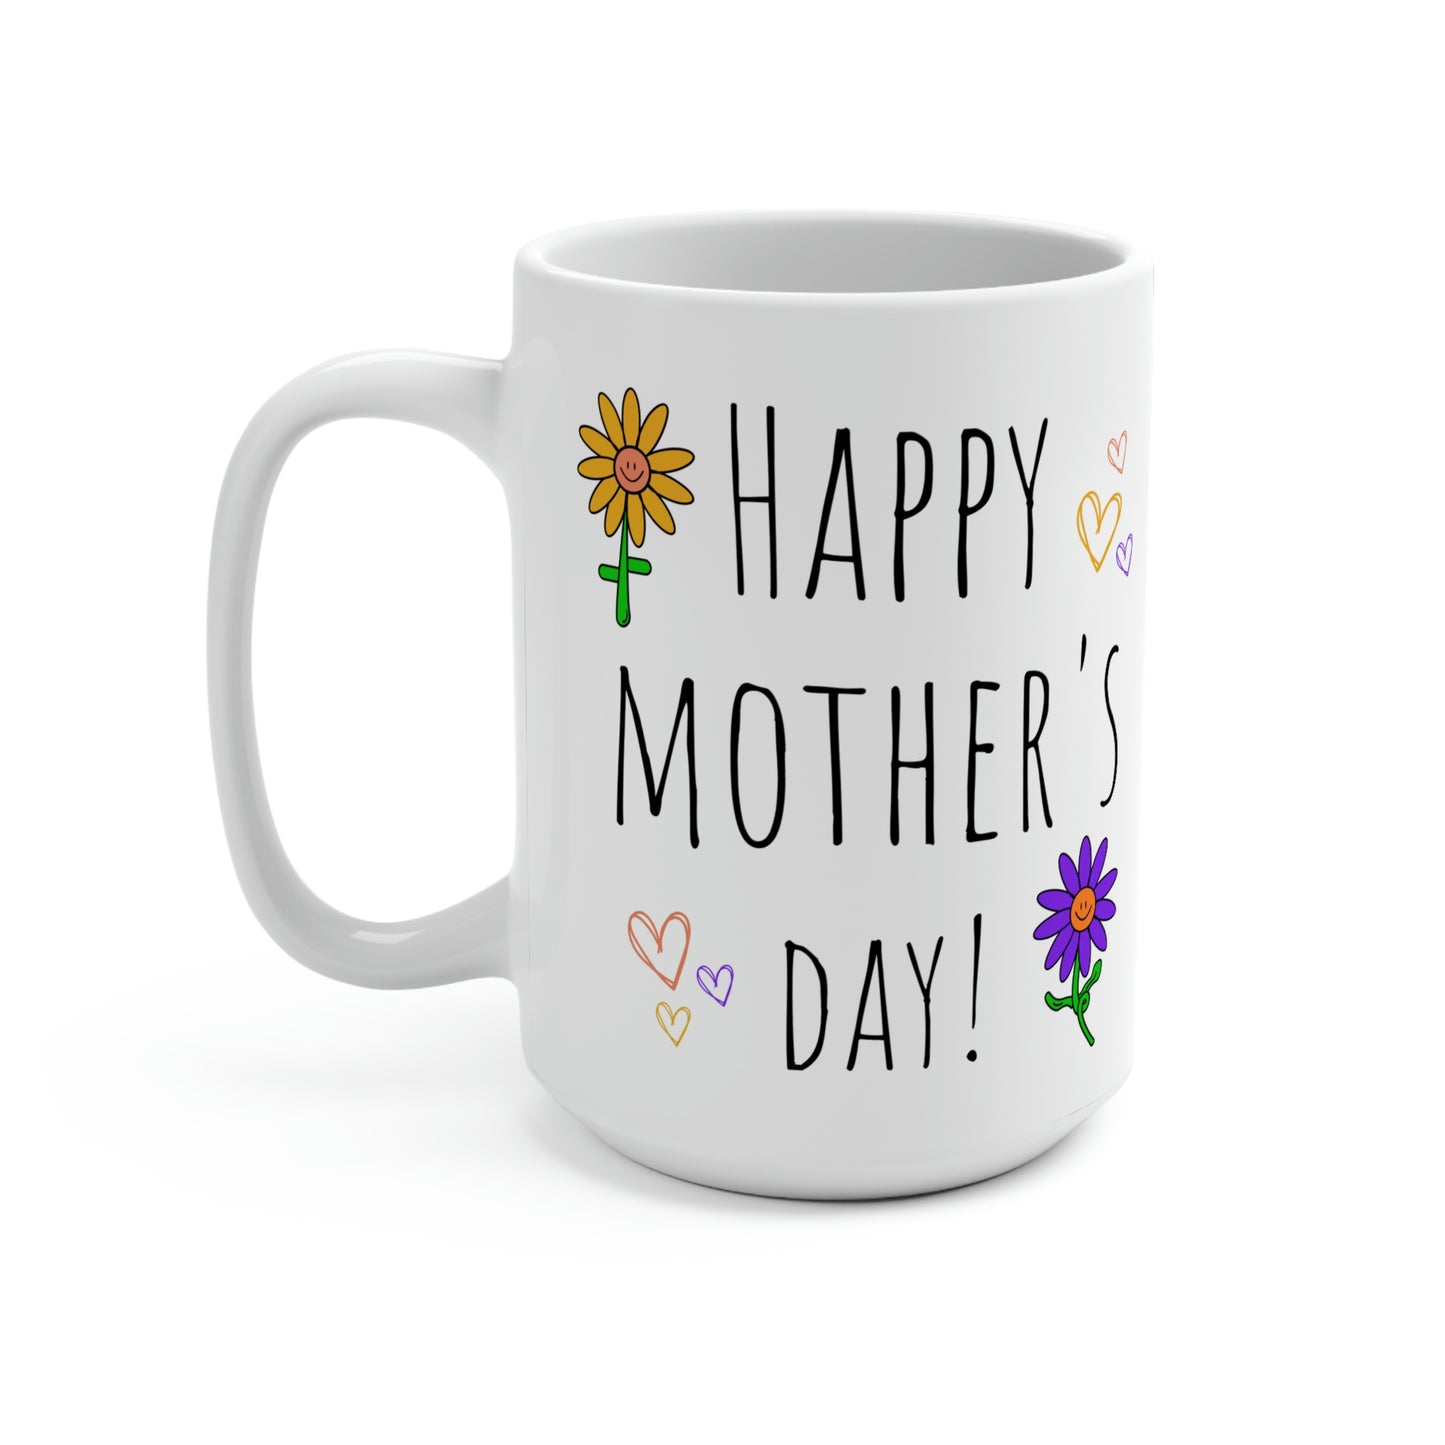 Mug 15oz Happy Mother's Day Coffee Mug, Flowers Mother's Day Gift Ideas, Mother's Day Gifts, Mother's Day Mugs